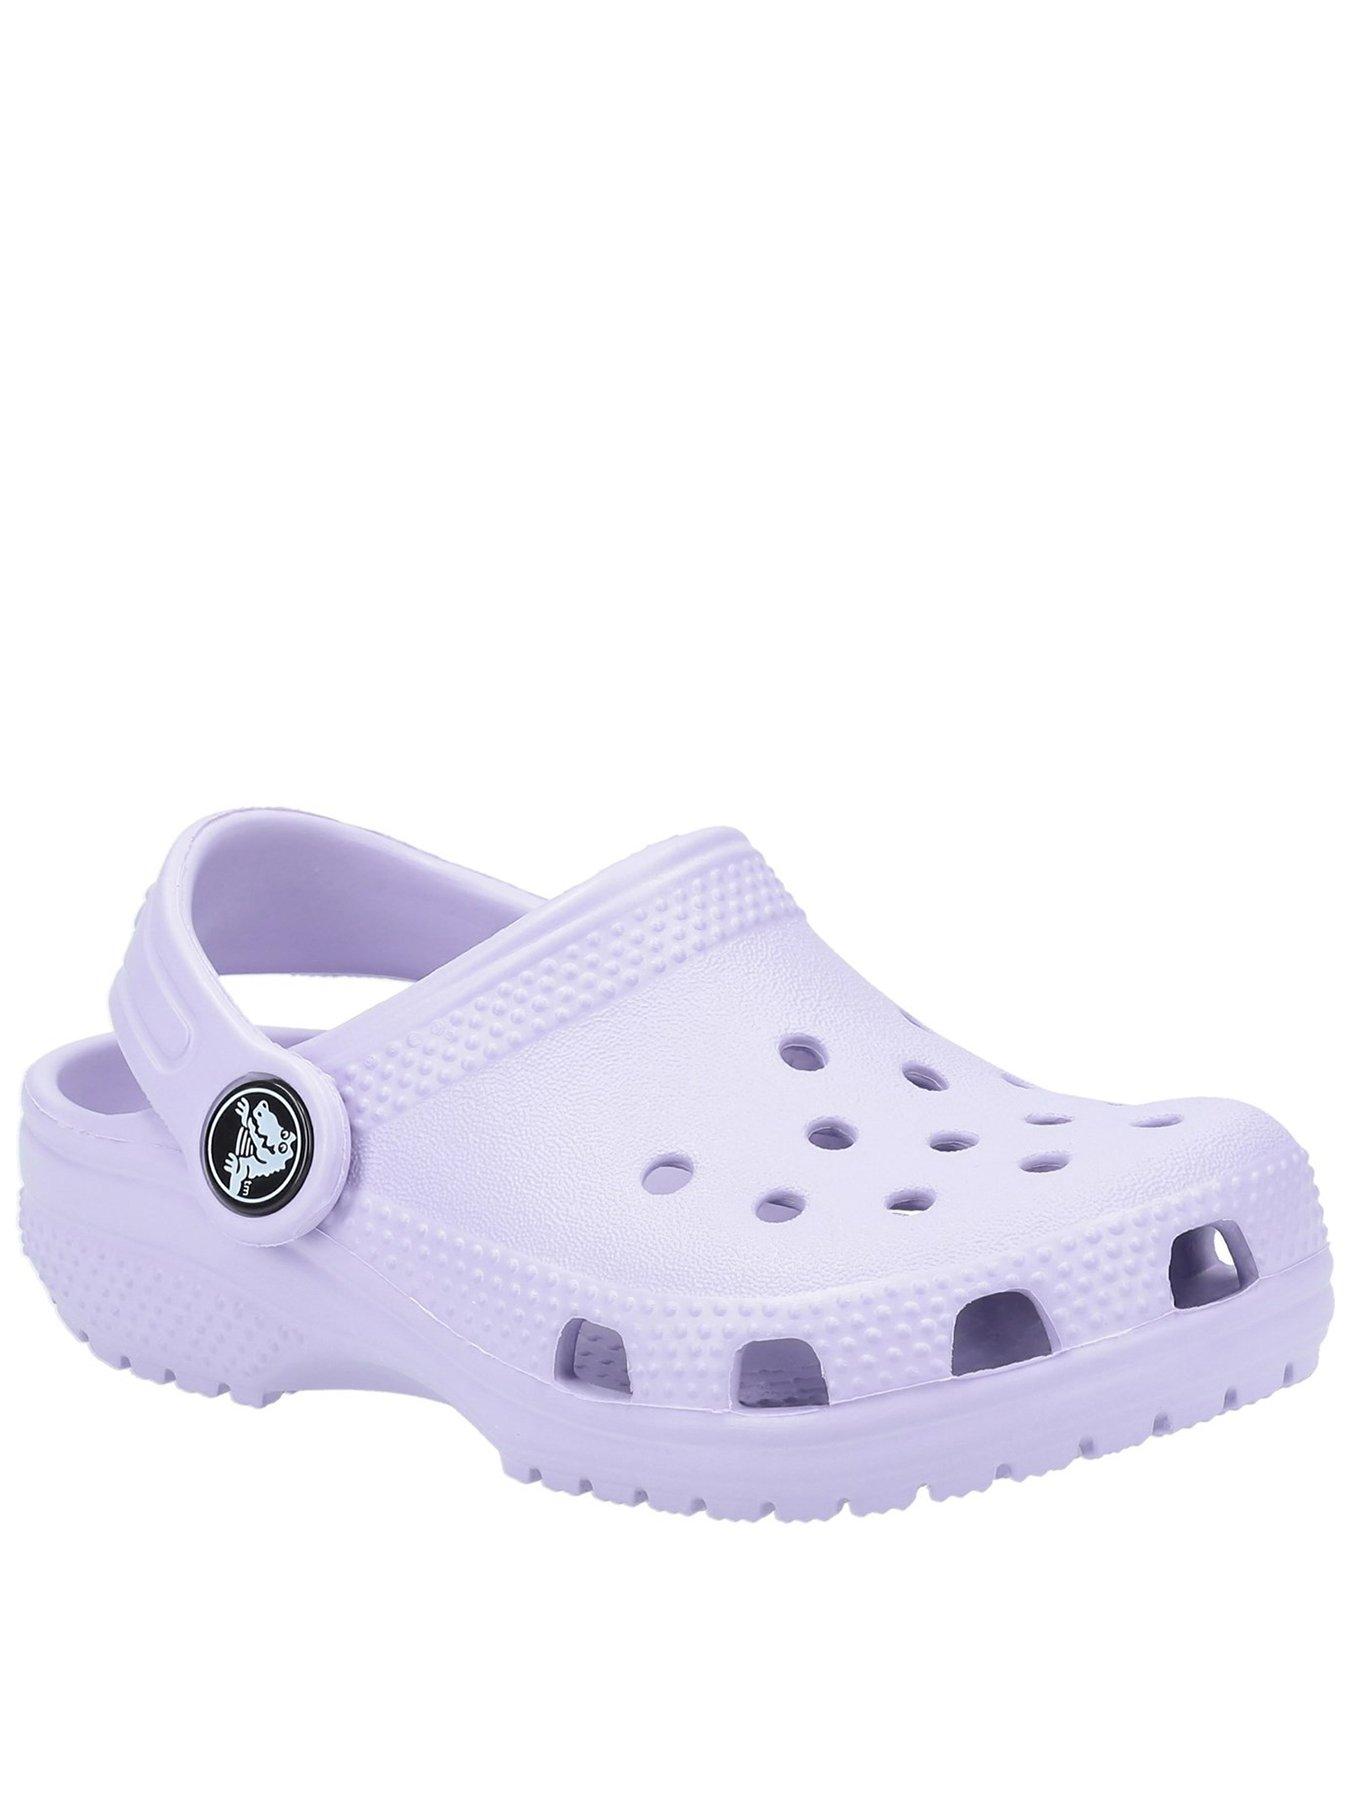 girls white crocs size 3